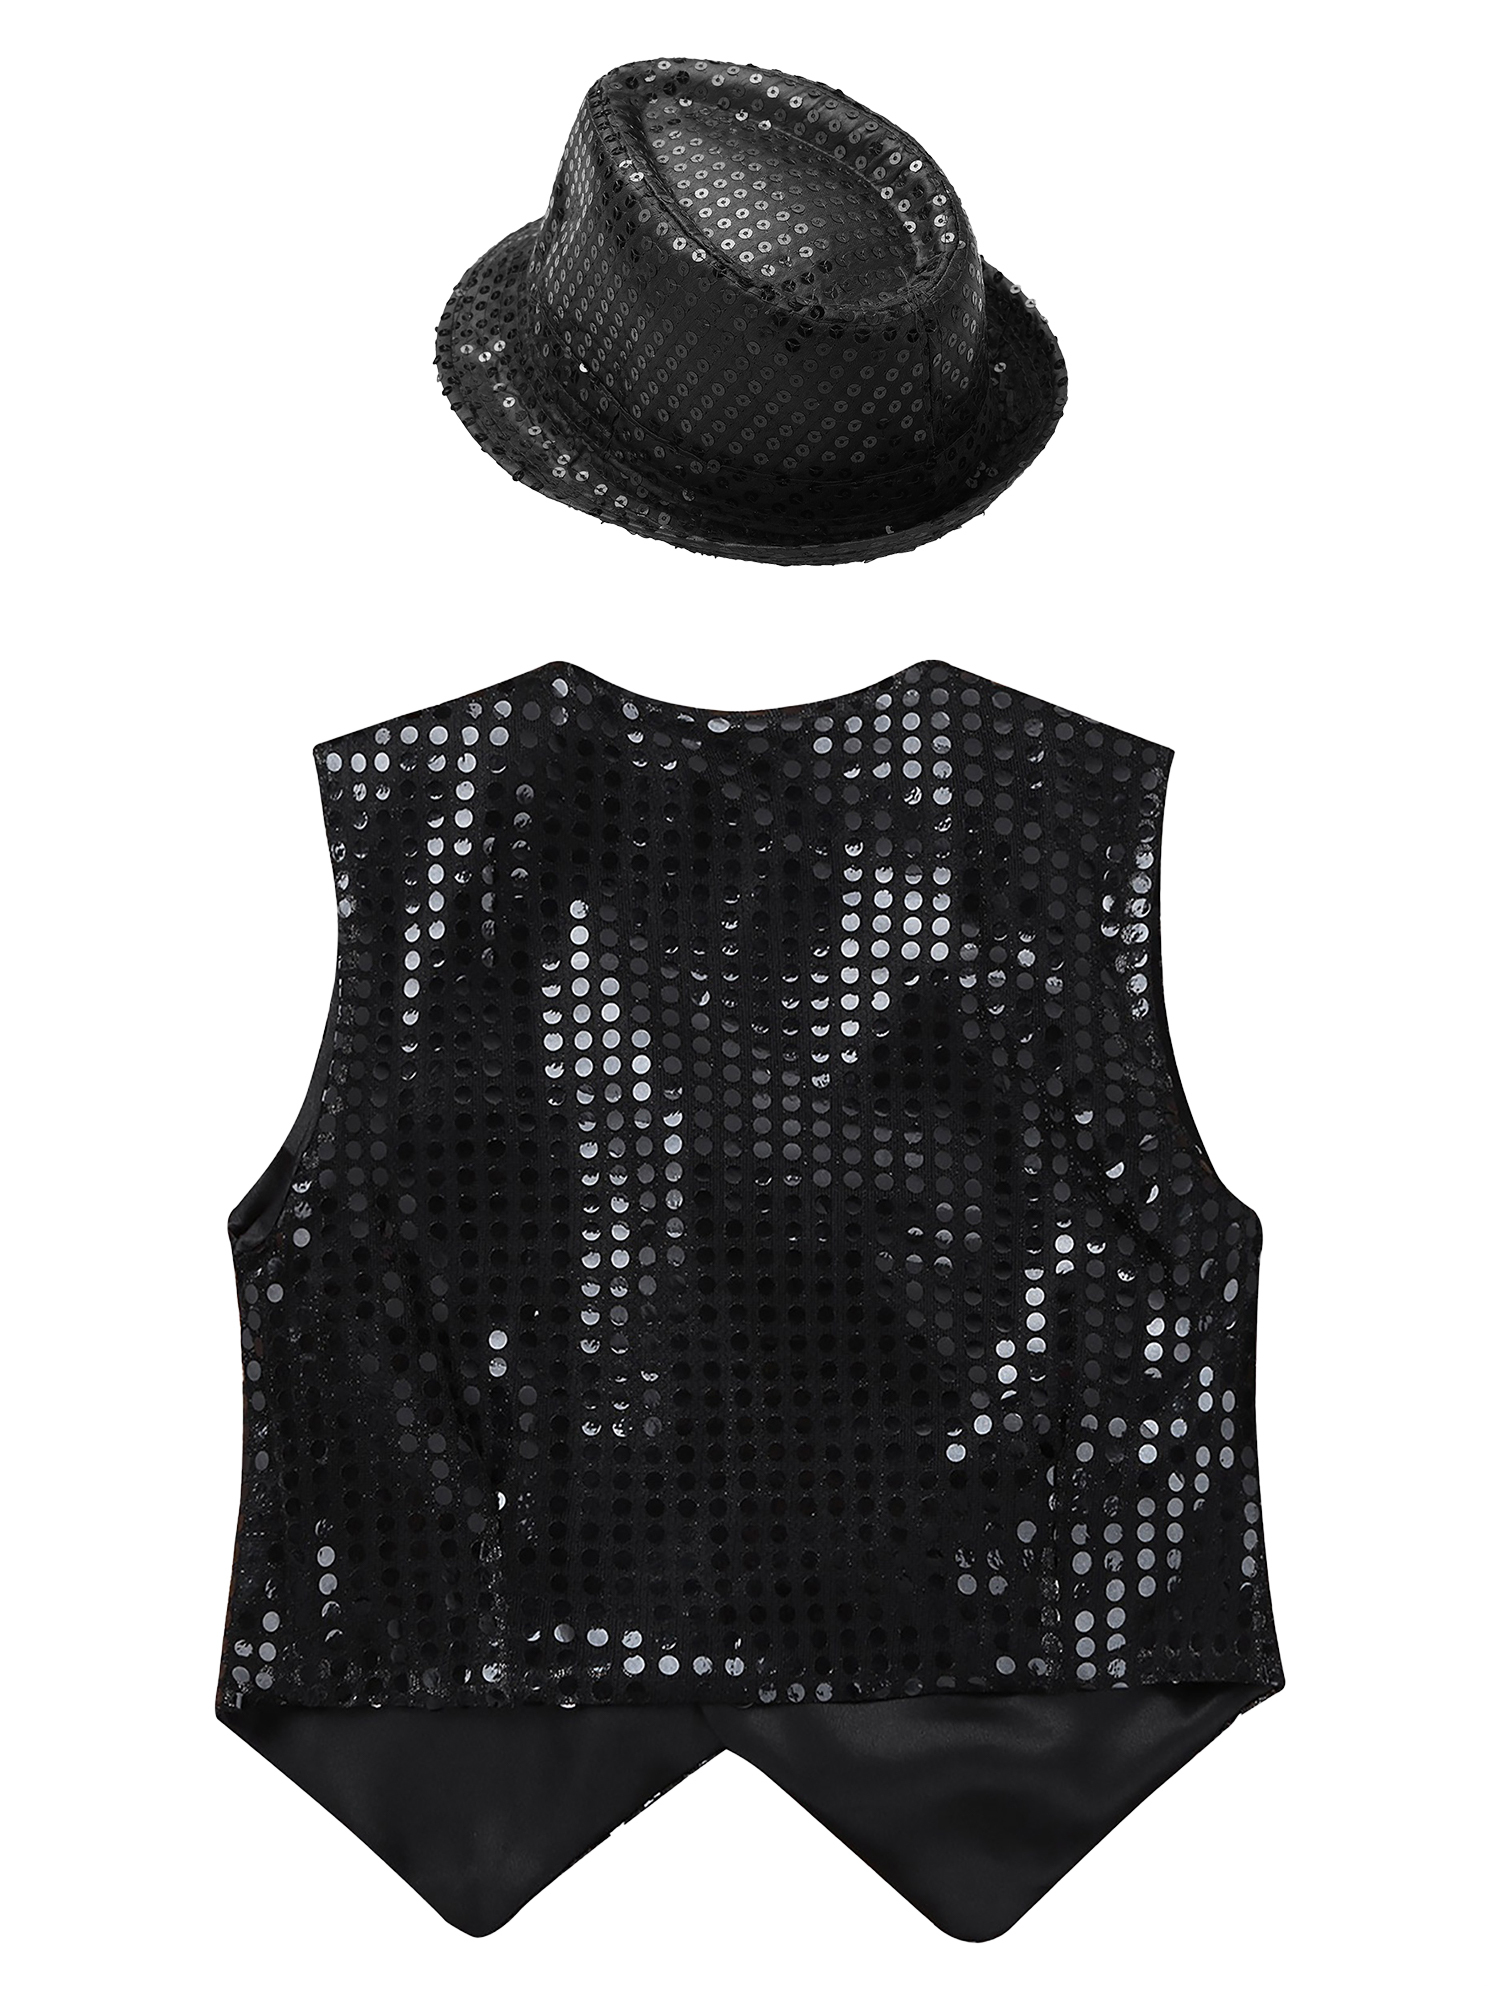 IEFIEL Kids Boys Sparkle Sequins Button Down Vest with Hat Dance Outfit Set Hip Hop Jazz Stage Performance Costume Black 13-14 - image 4 of 7